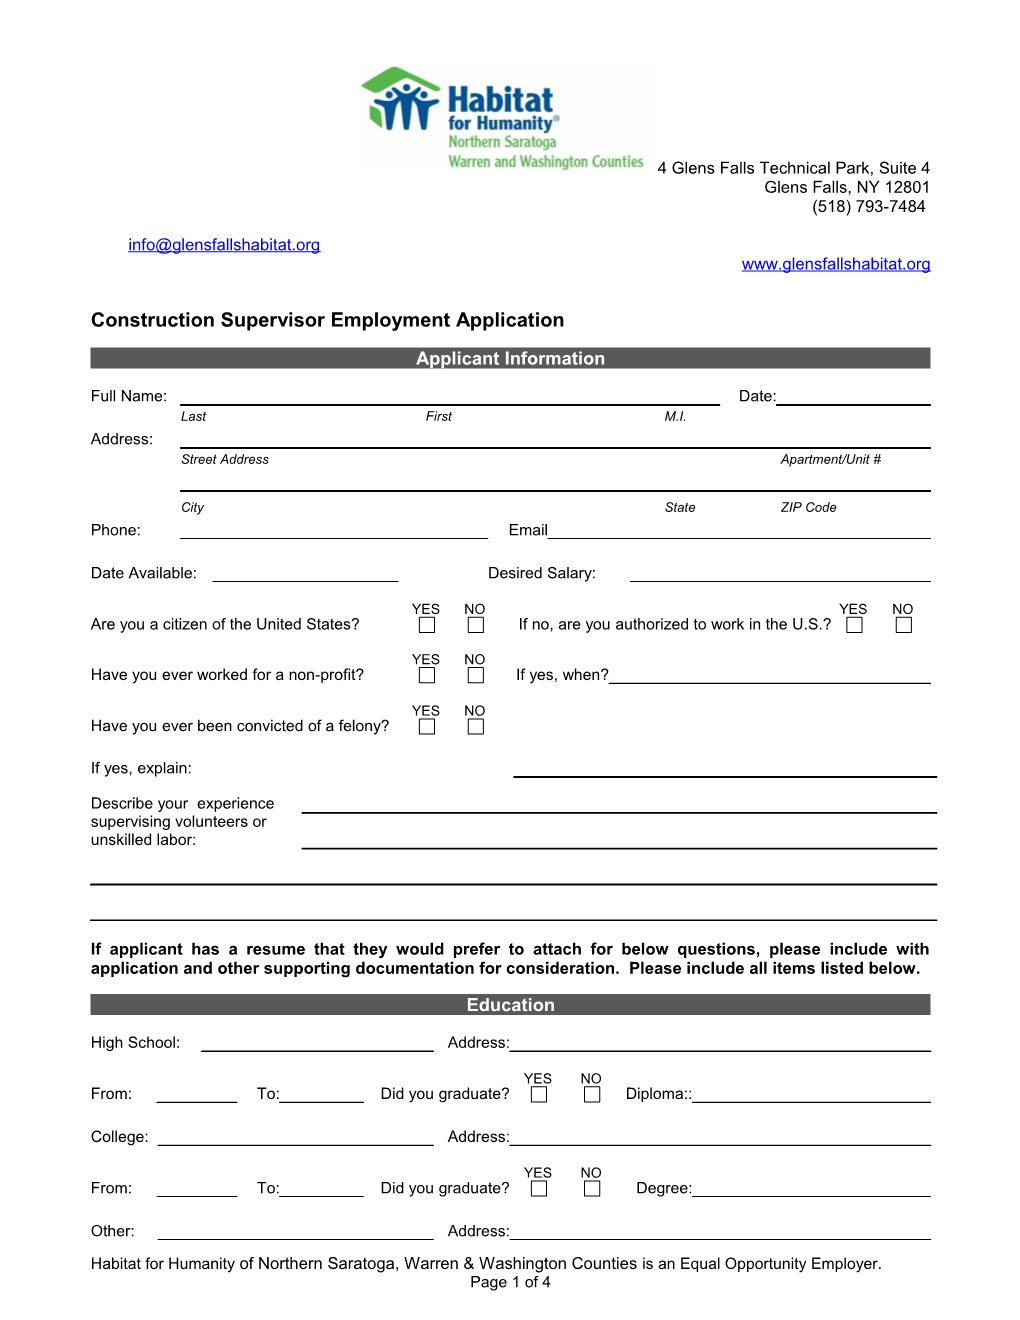 Construction Supervisor Employment Application